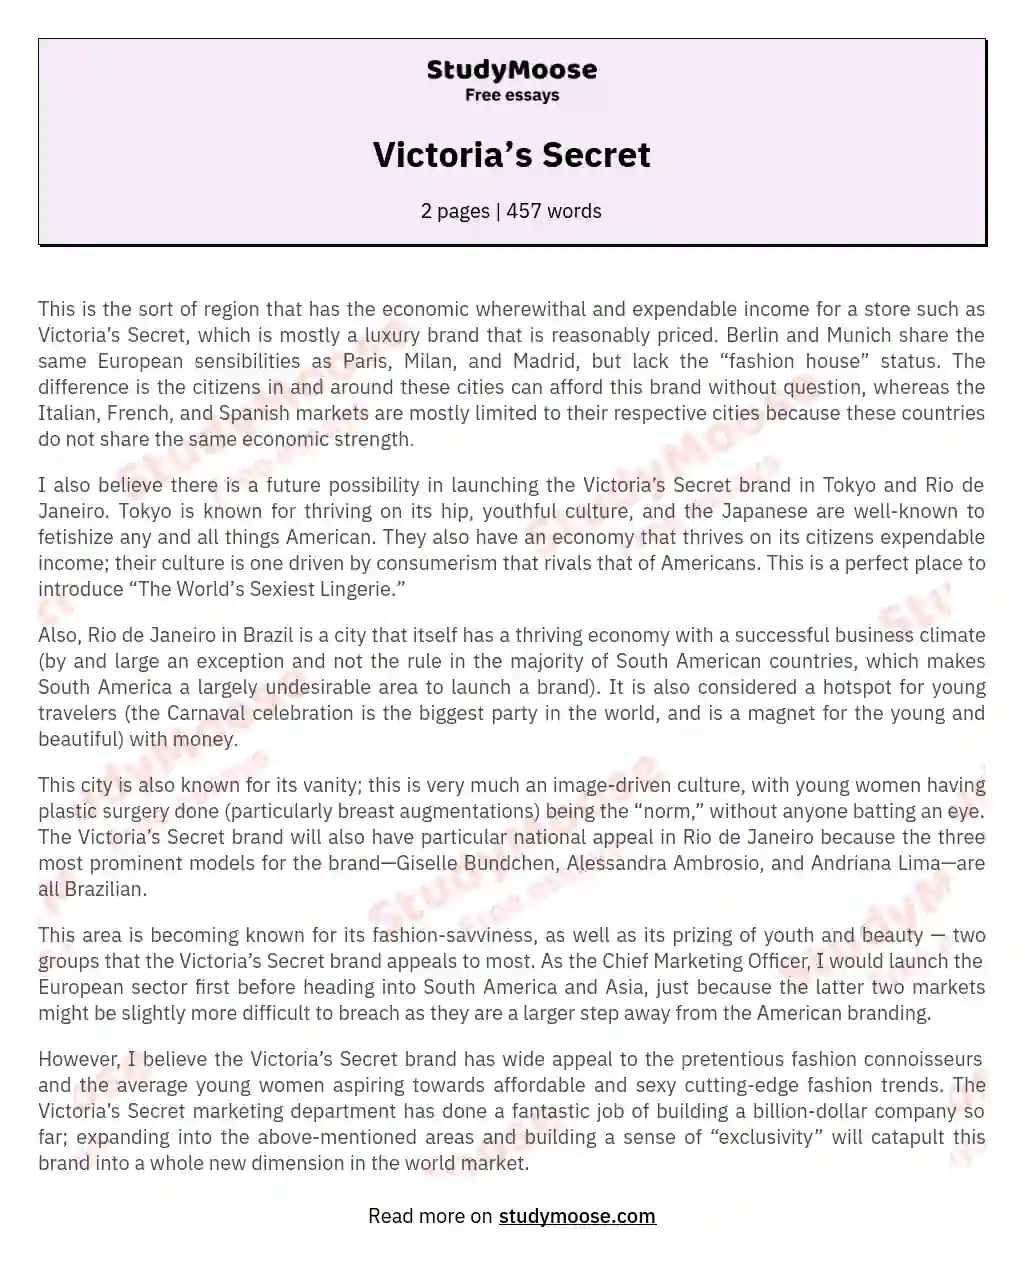 Victoria’s Secret essay